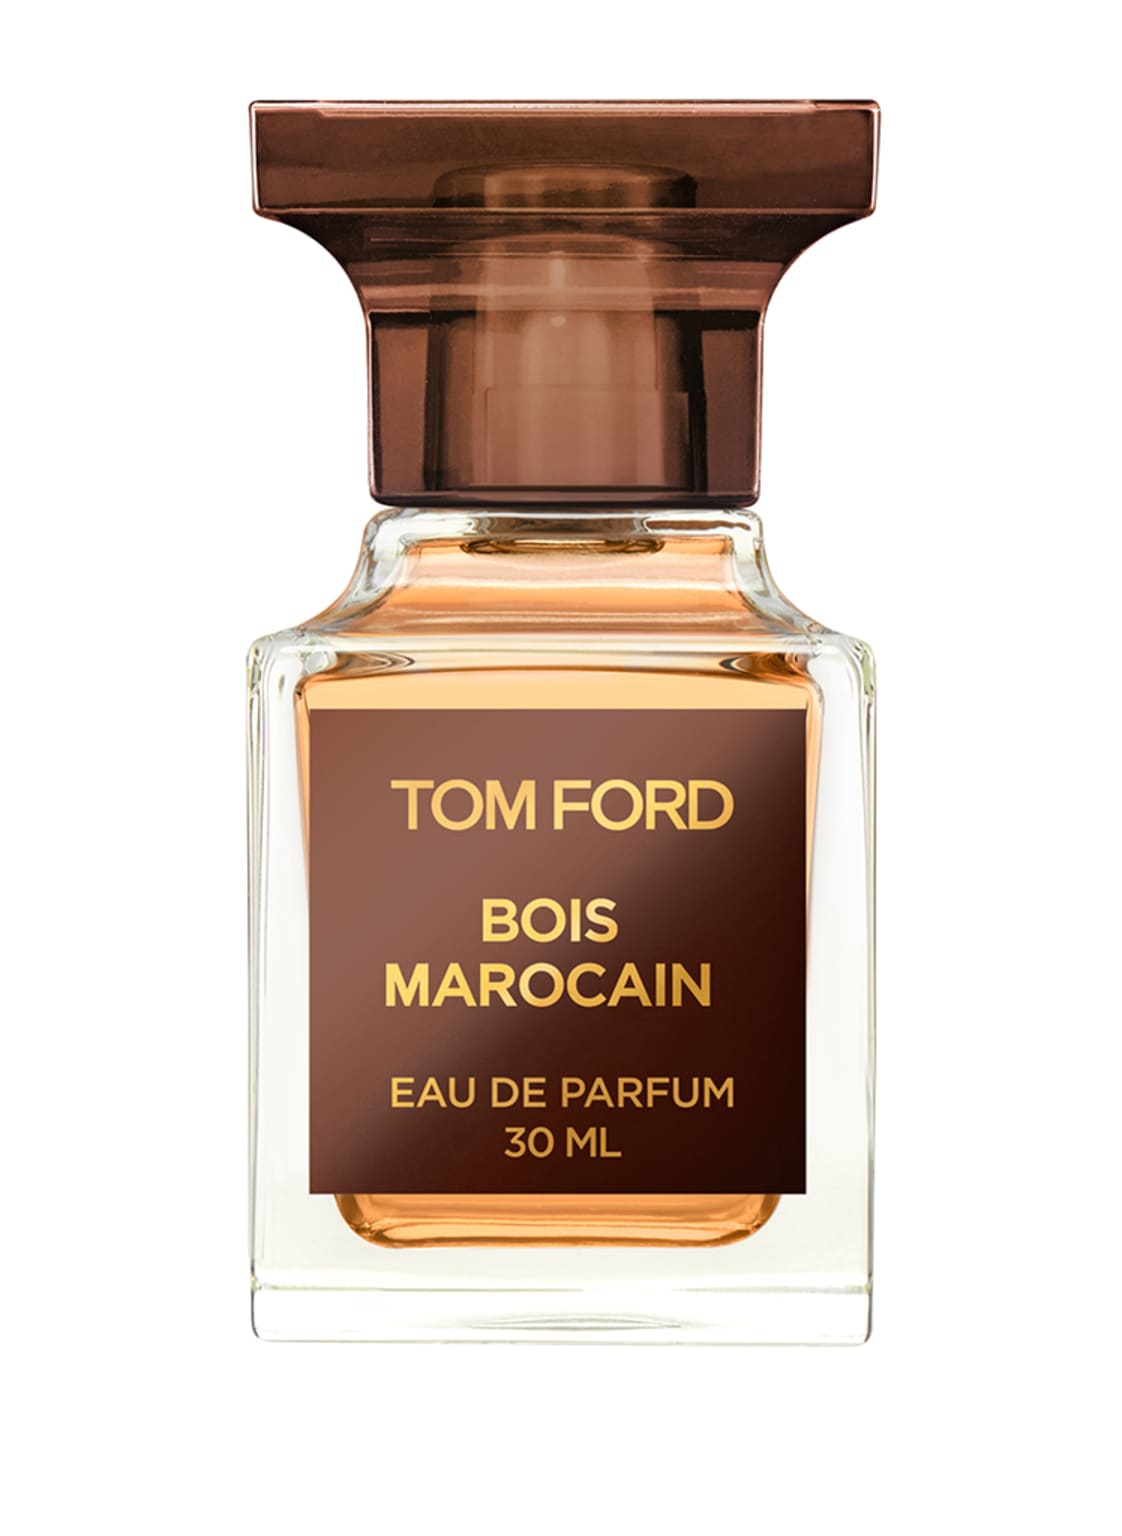 Image of Tom Ford Beauty Bois Marocain Eau de Parfum 30 ml